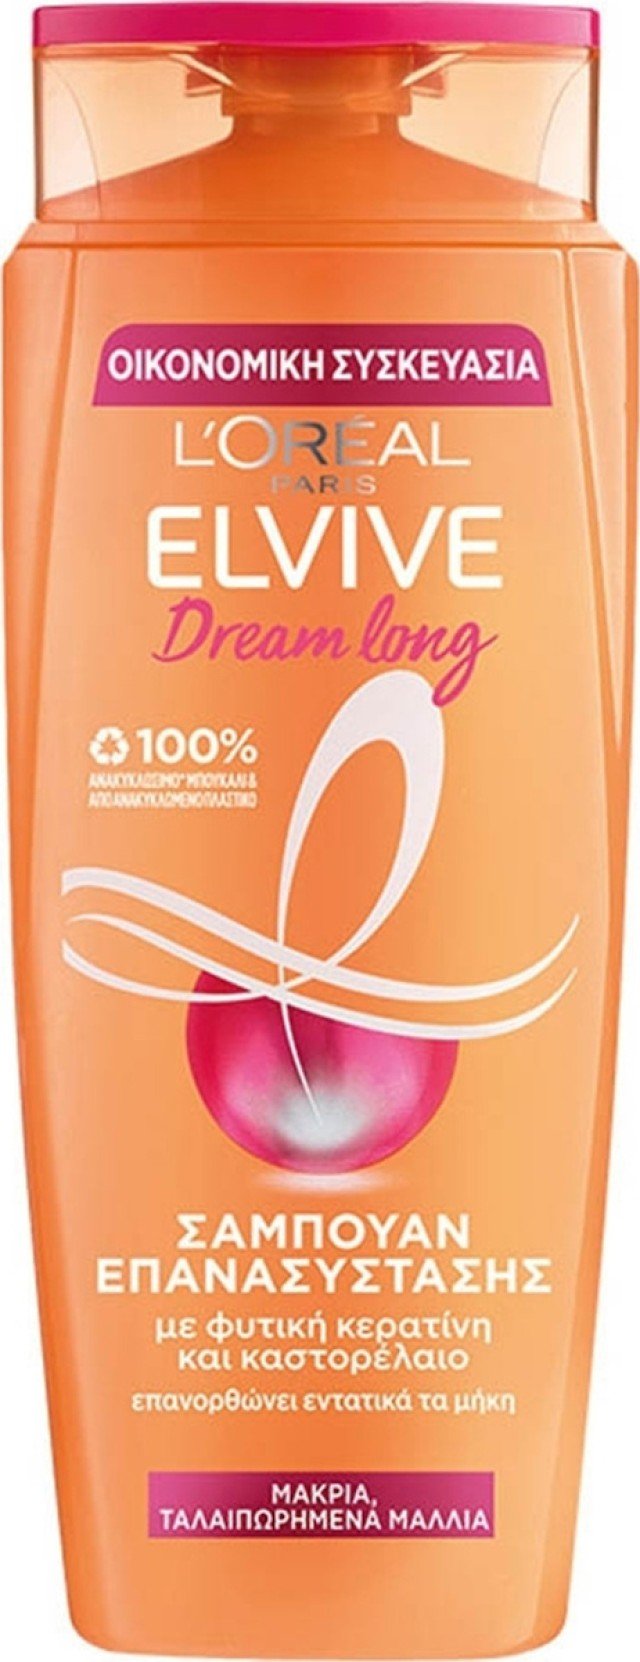 LOreal Paris Elvive Dream Long Shampoo Σαμπουάν Επανασύστασης για Μακριά - Ταλαιπωρημένα Μαλλιά 700ml